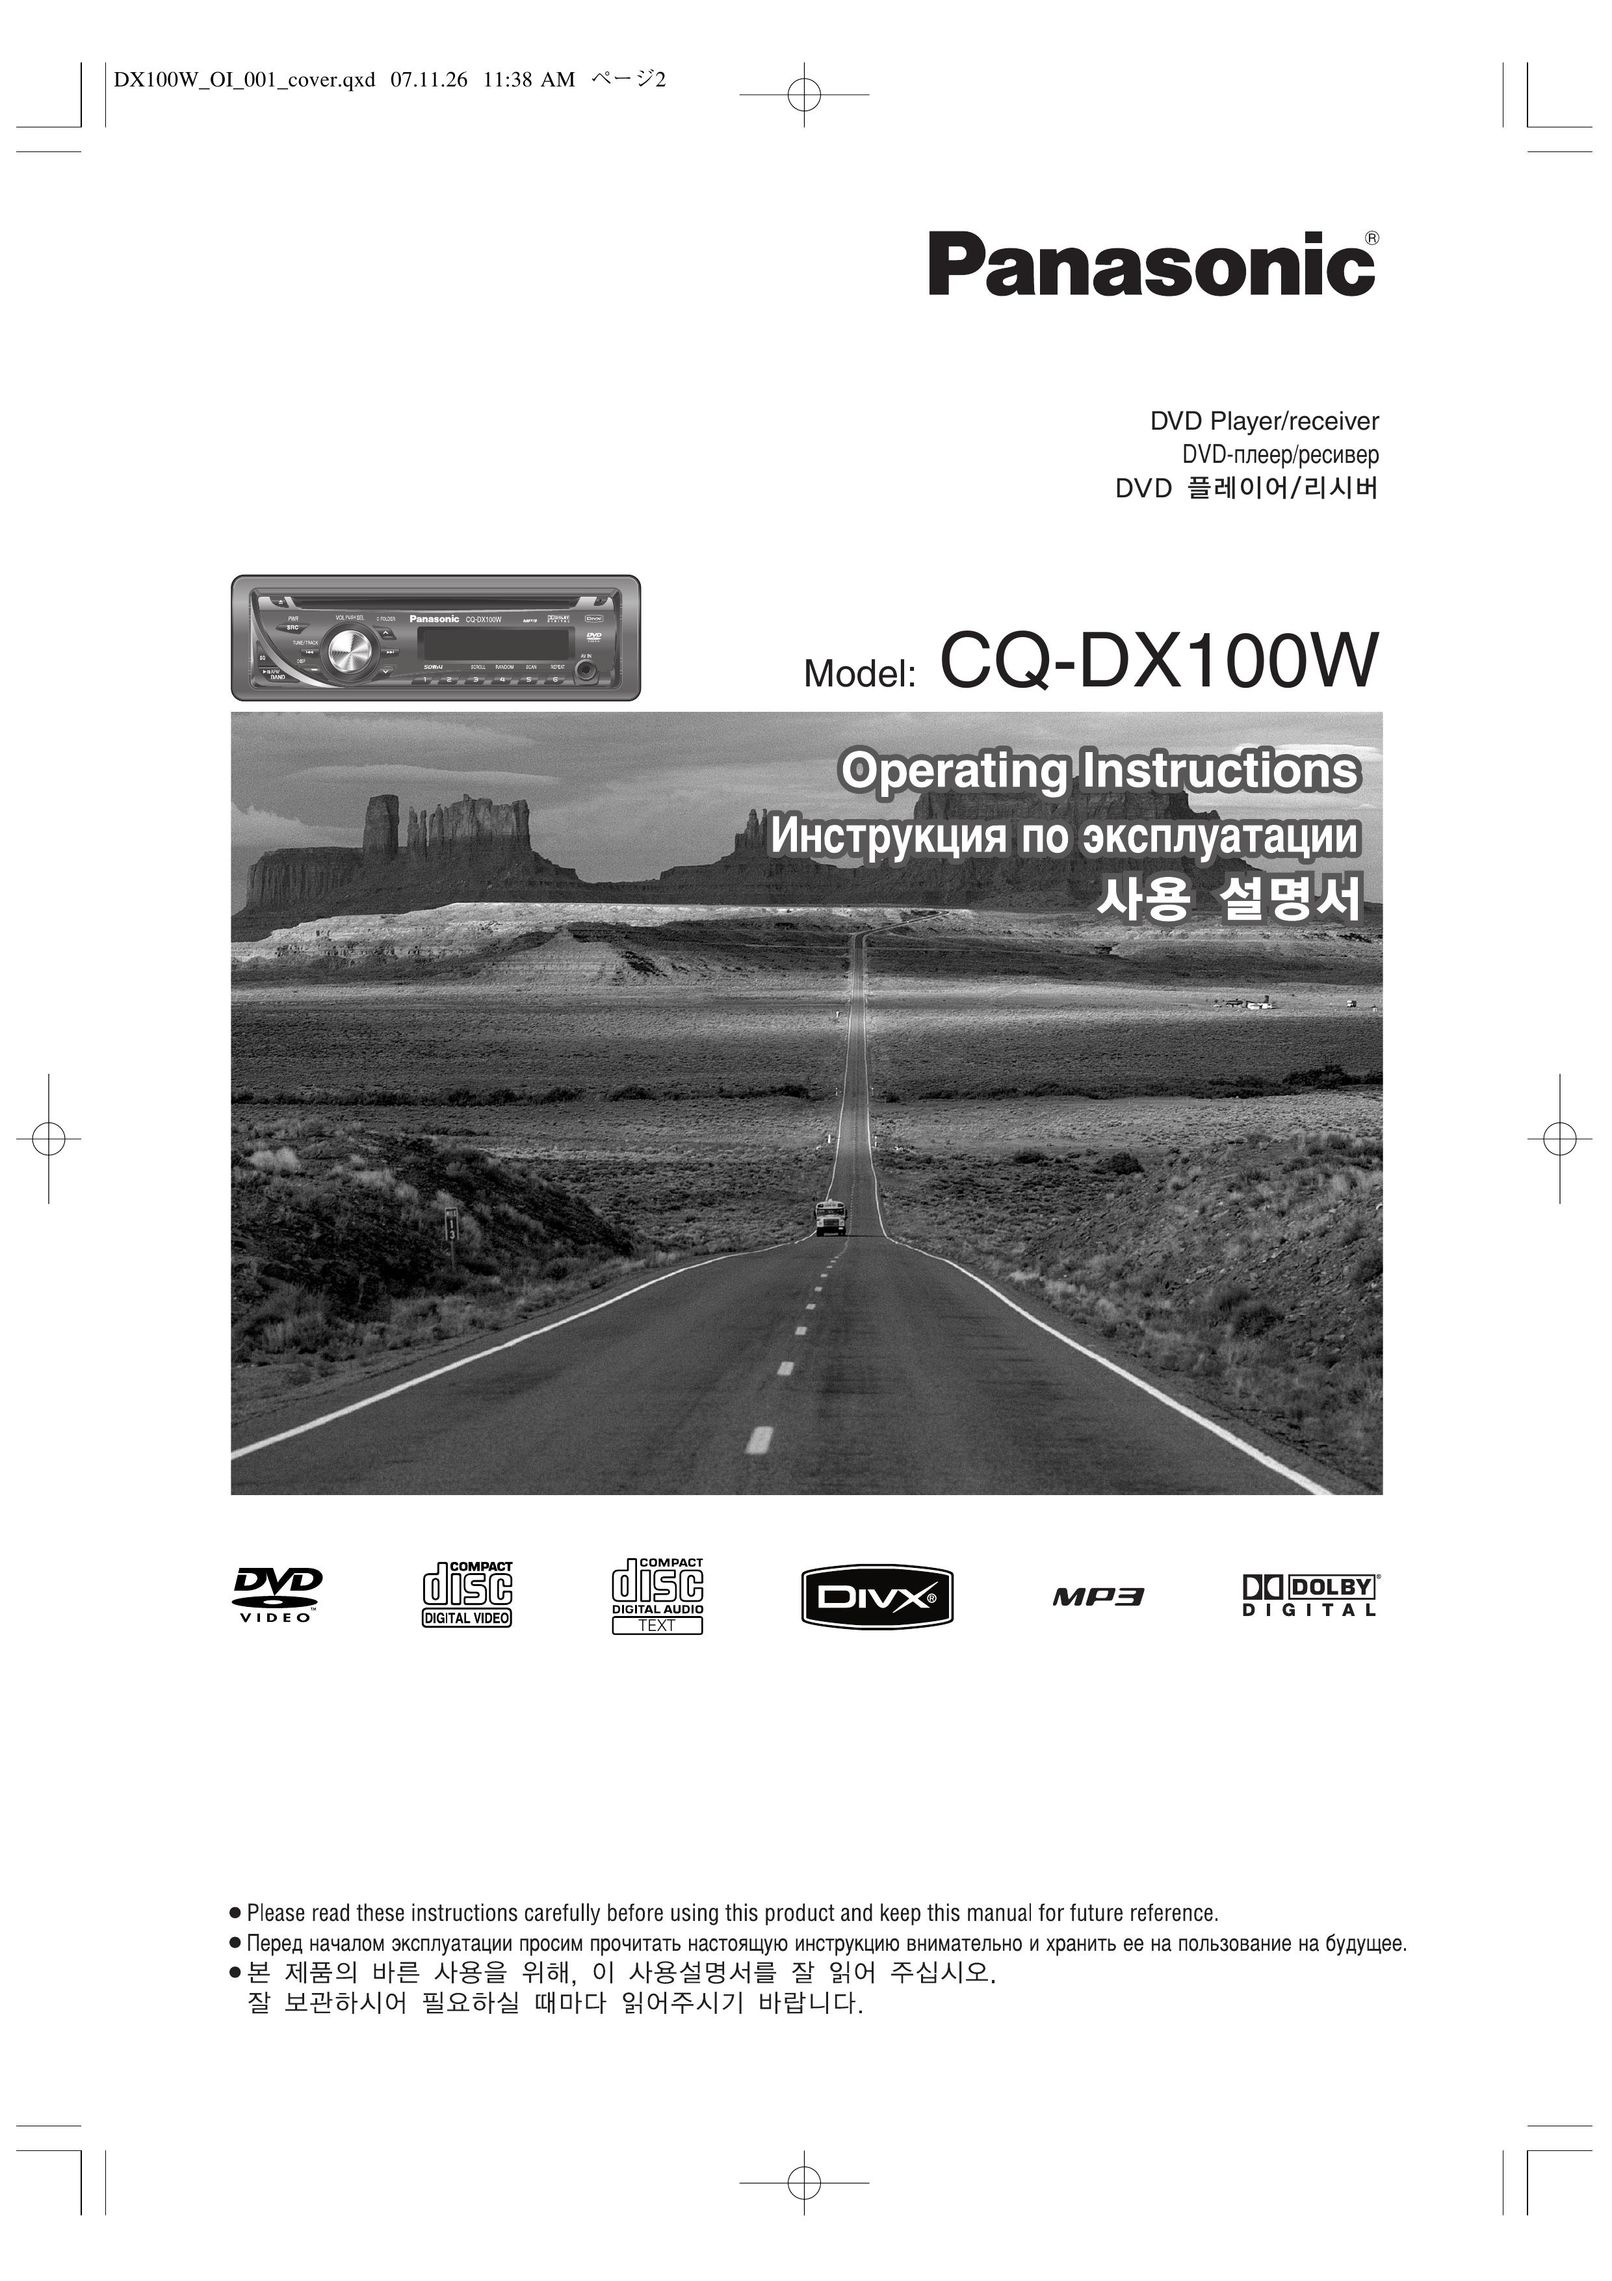 Panasonic CQ-DX100W DVD Player User Manual